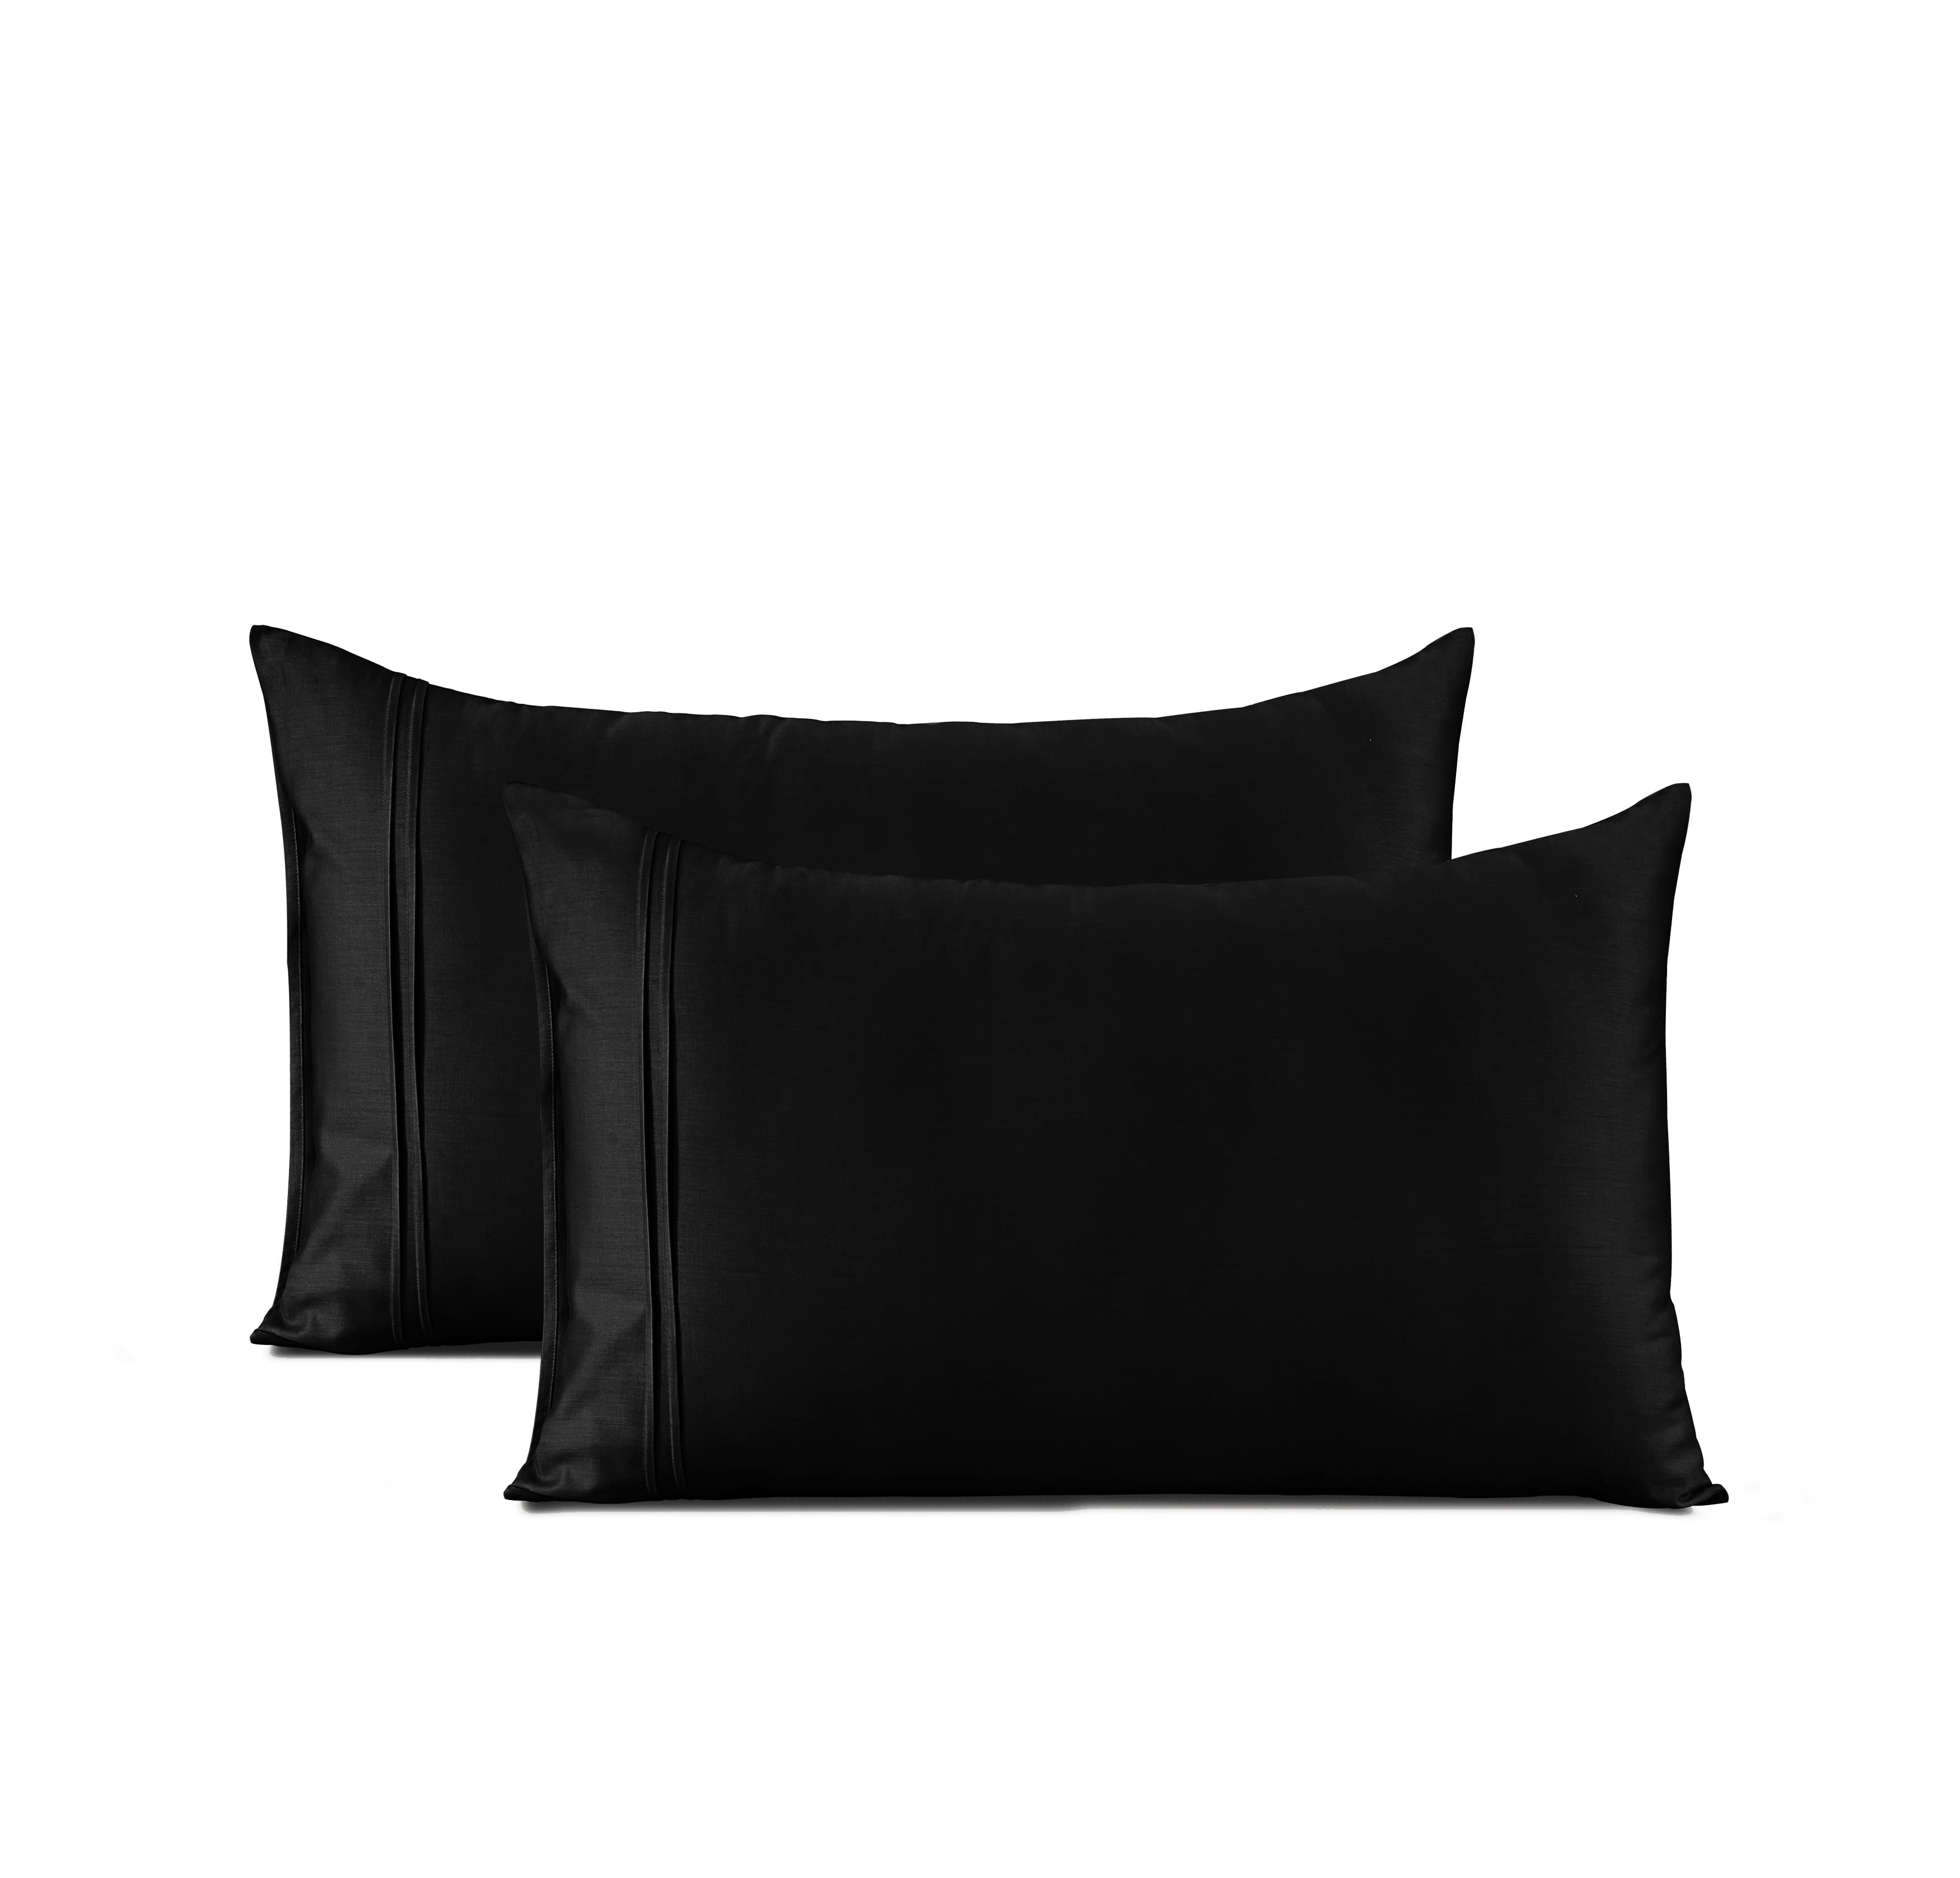 Soft Black 400 TC Cotton Satin Designer Pillow Covers Online In India